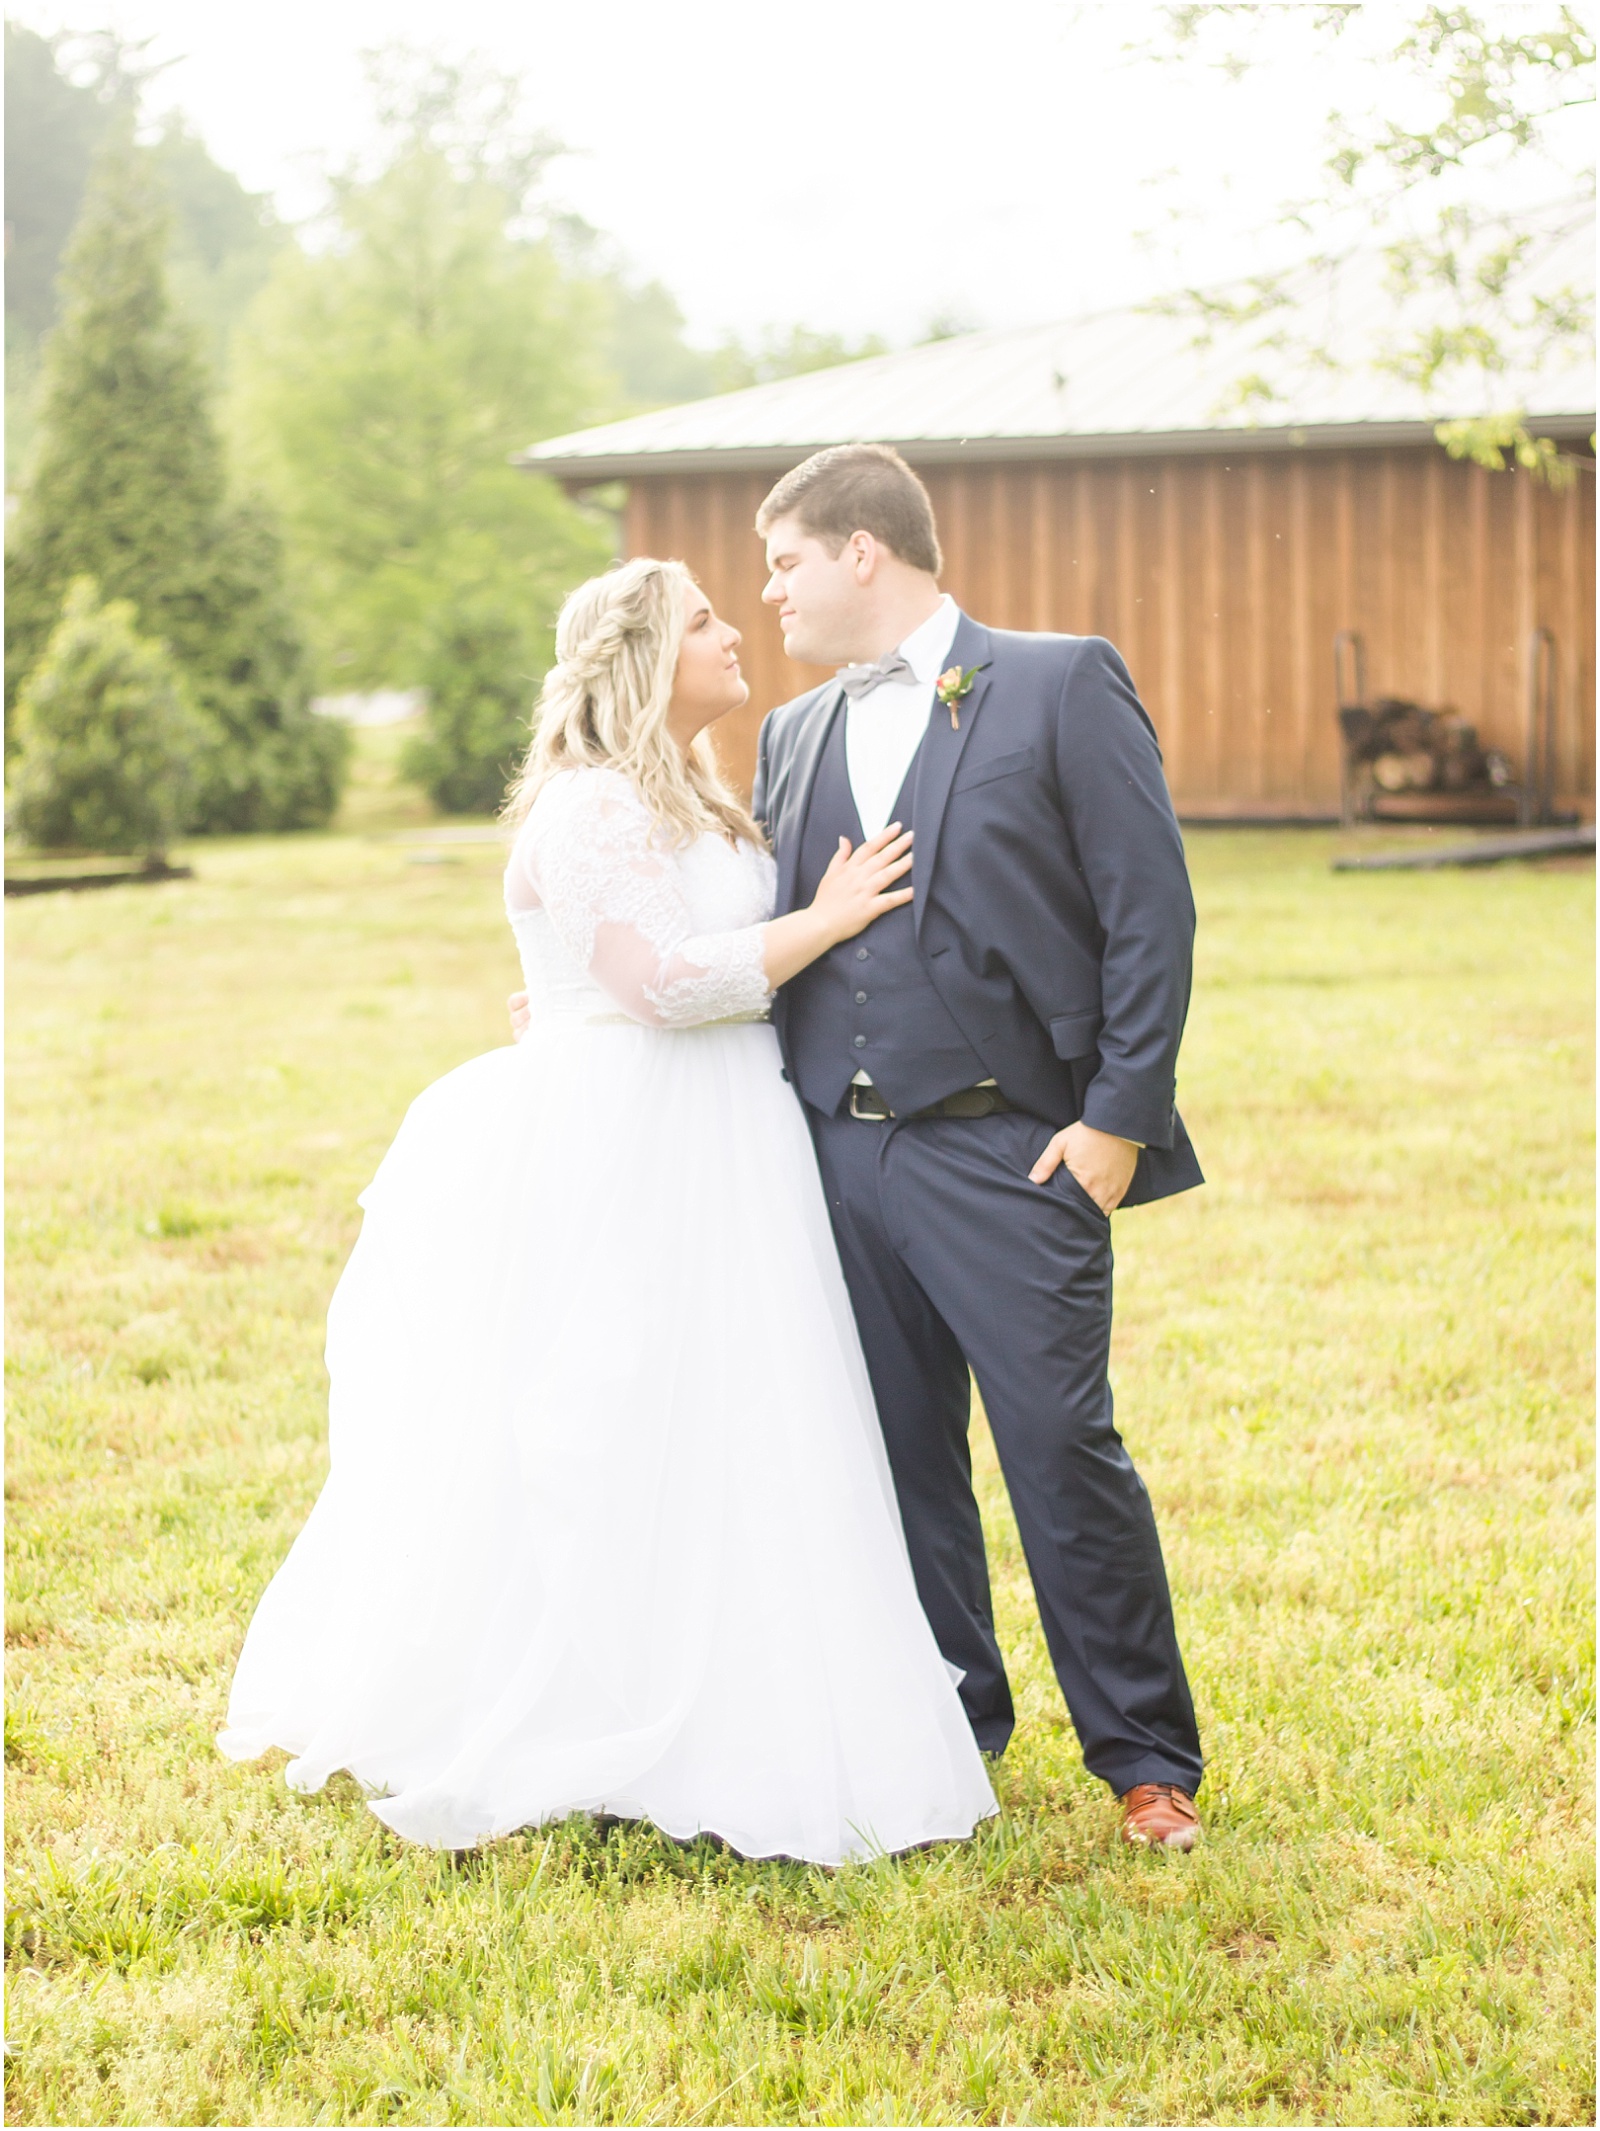 Kayla + Zach - A Historic Carson House Wedding // Alyssa Brooke Photography // #weddings #ashevilleweddings #ncweddings #alyssabrookephotography #rusticwedding #barnwedding #springflorals